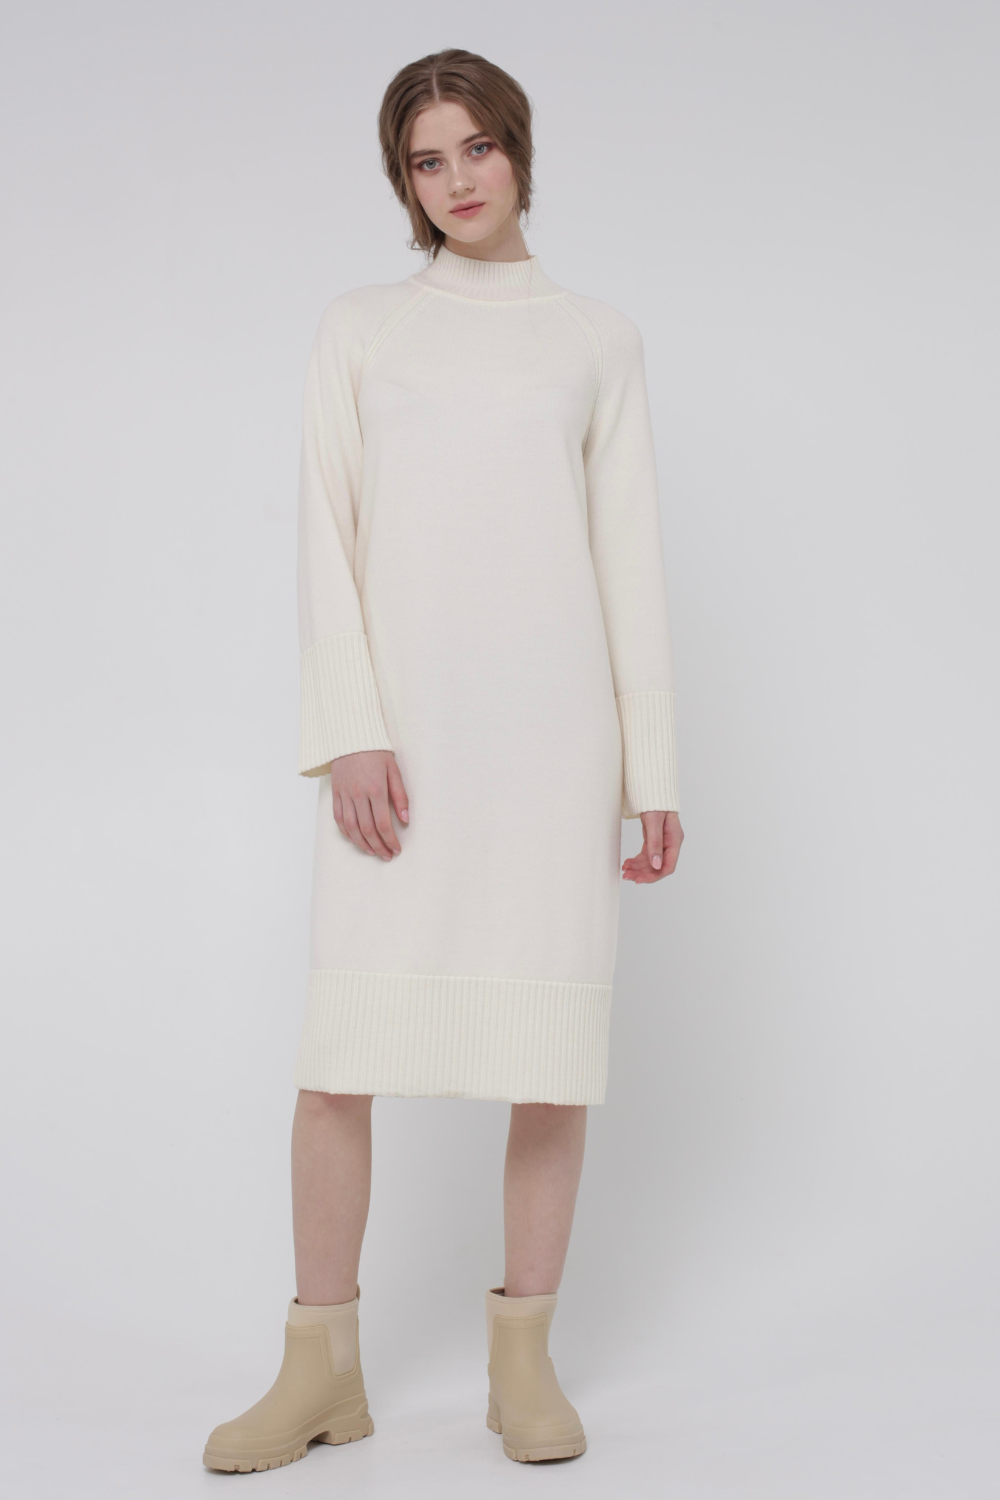 Šaty raglan midi, krémové (MissSecret) PU-022-white-dress